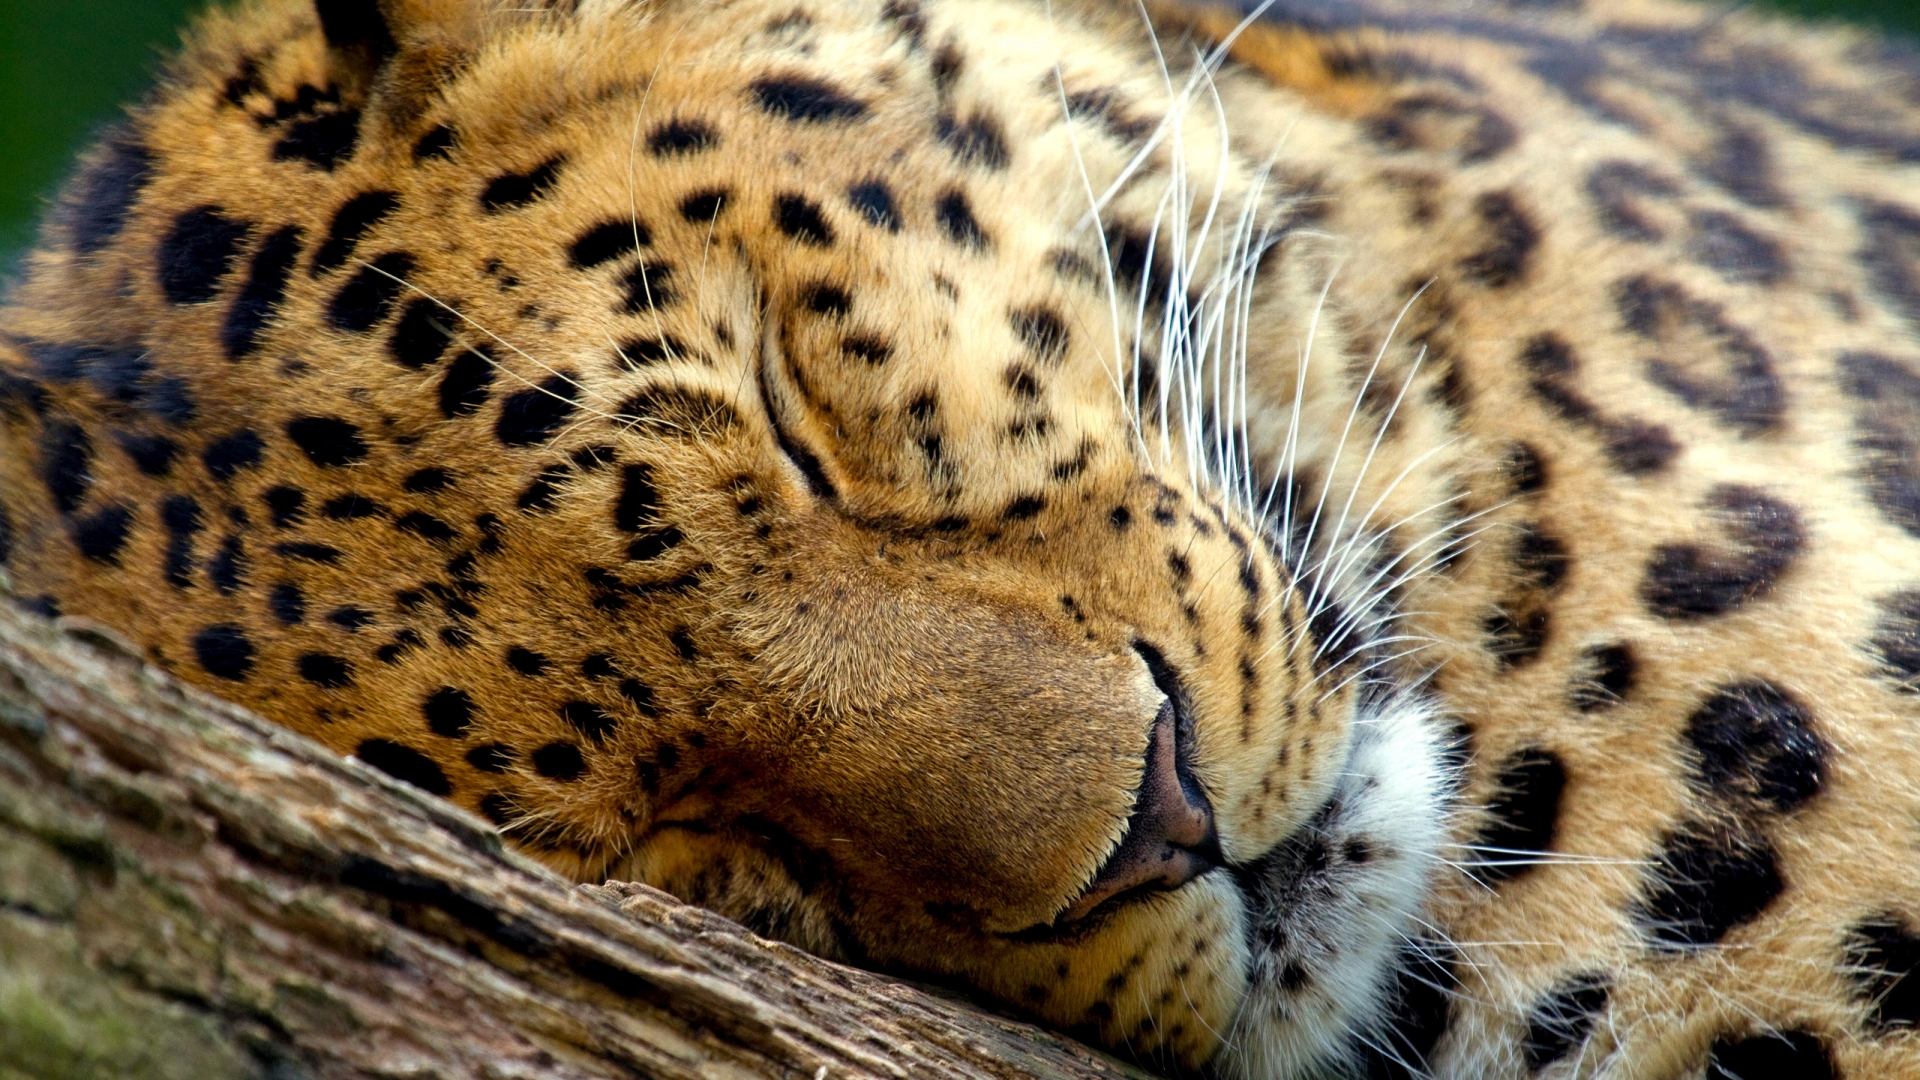 Cute Leopard Sleeping for 1920 x 1080 HDTV 1080p resolution